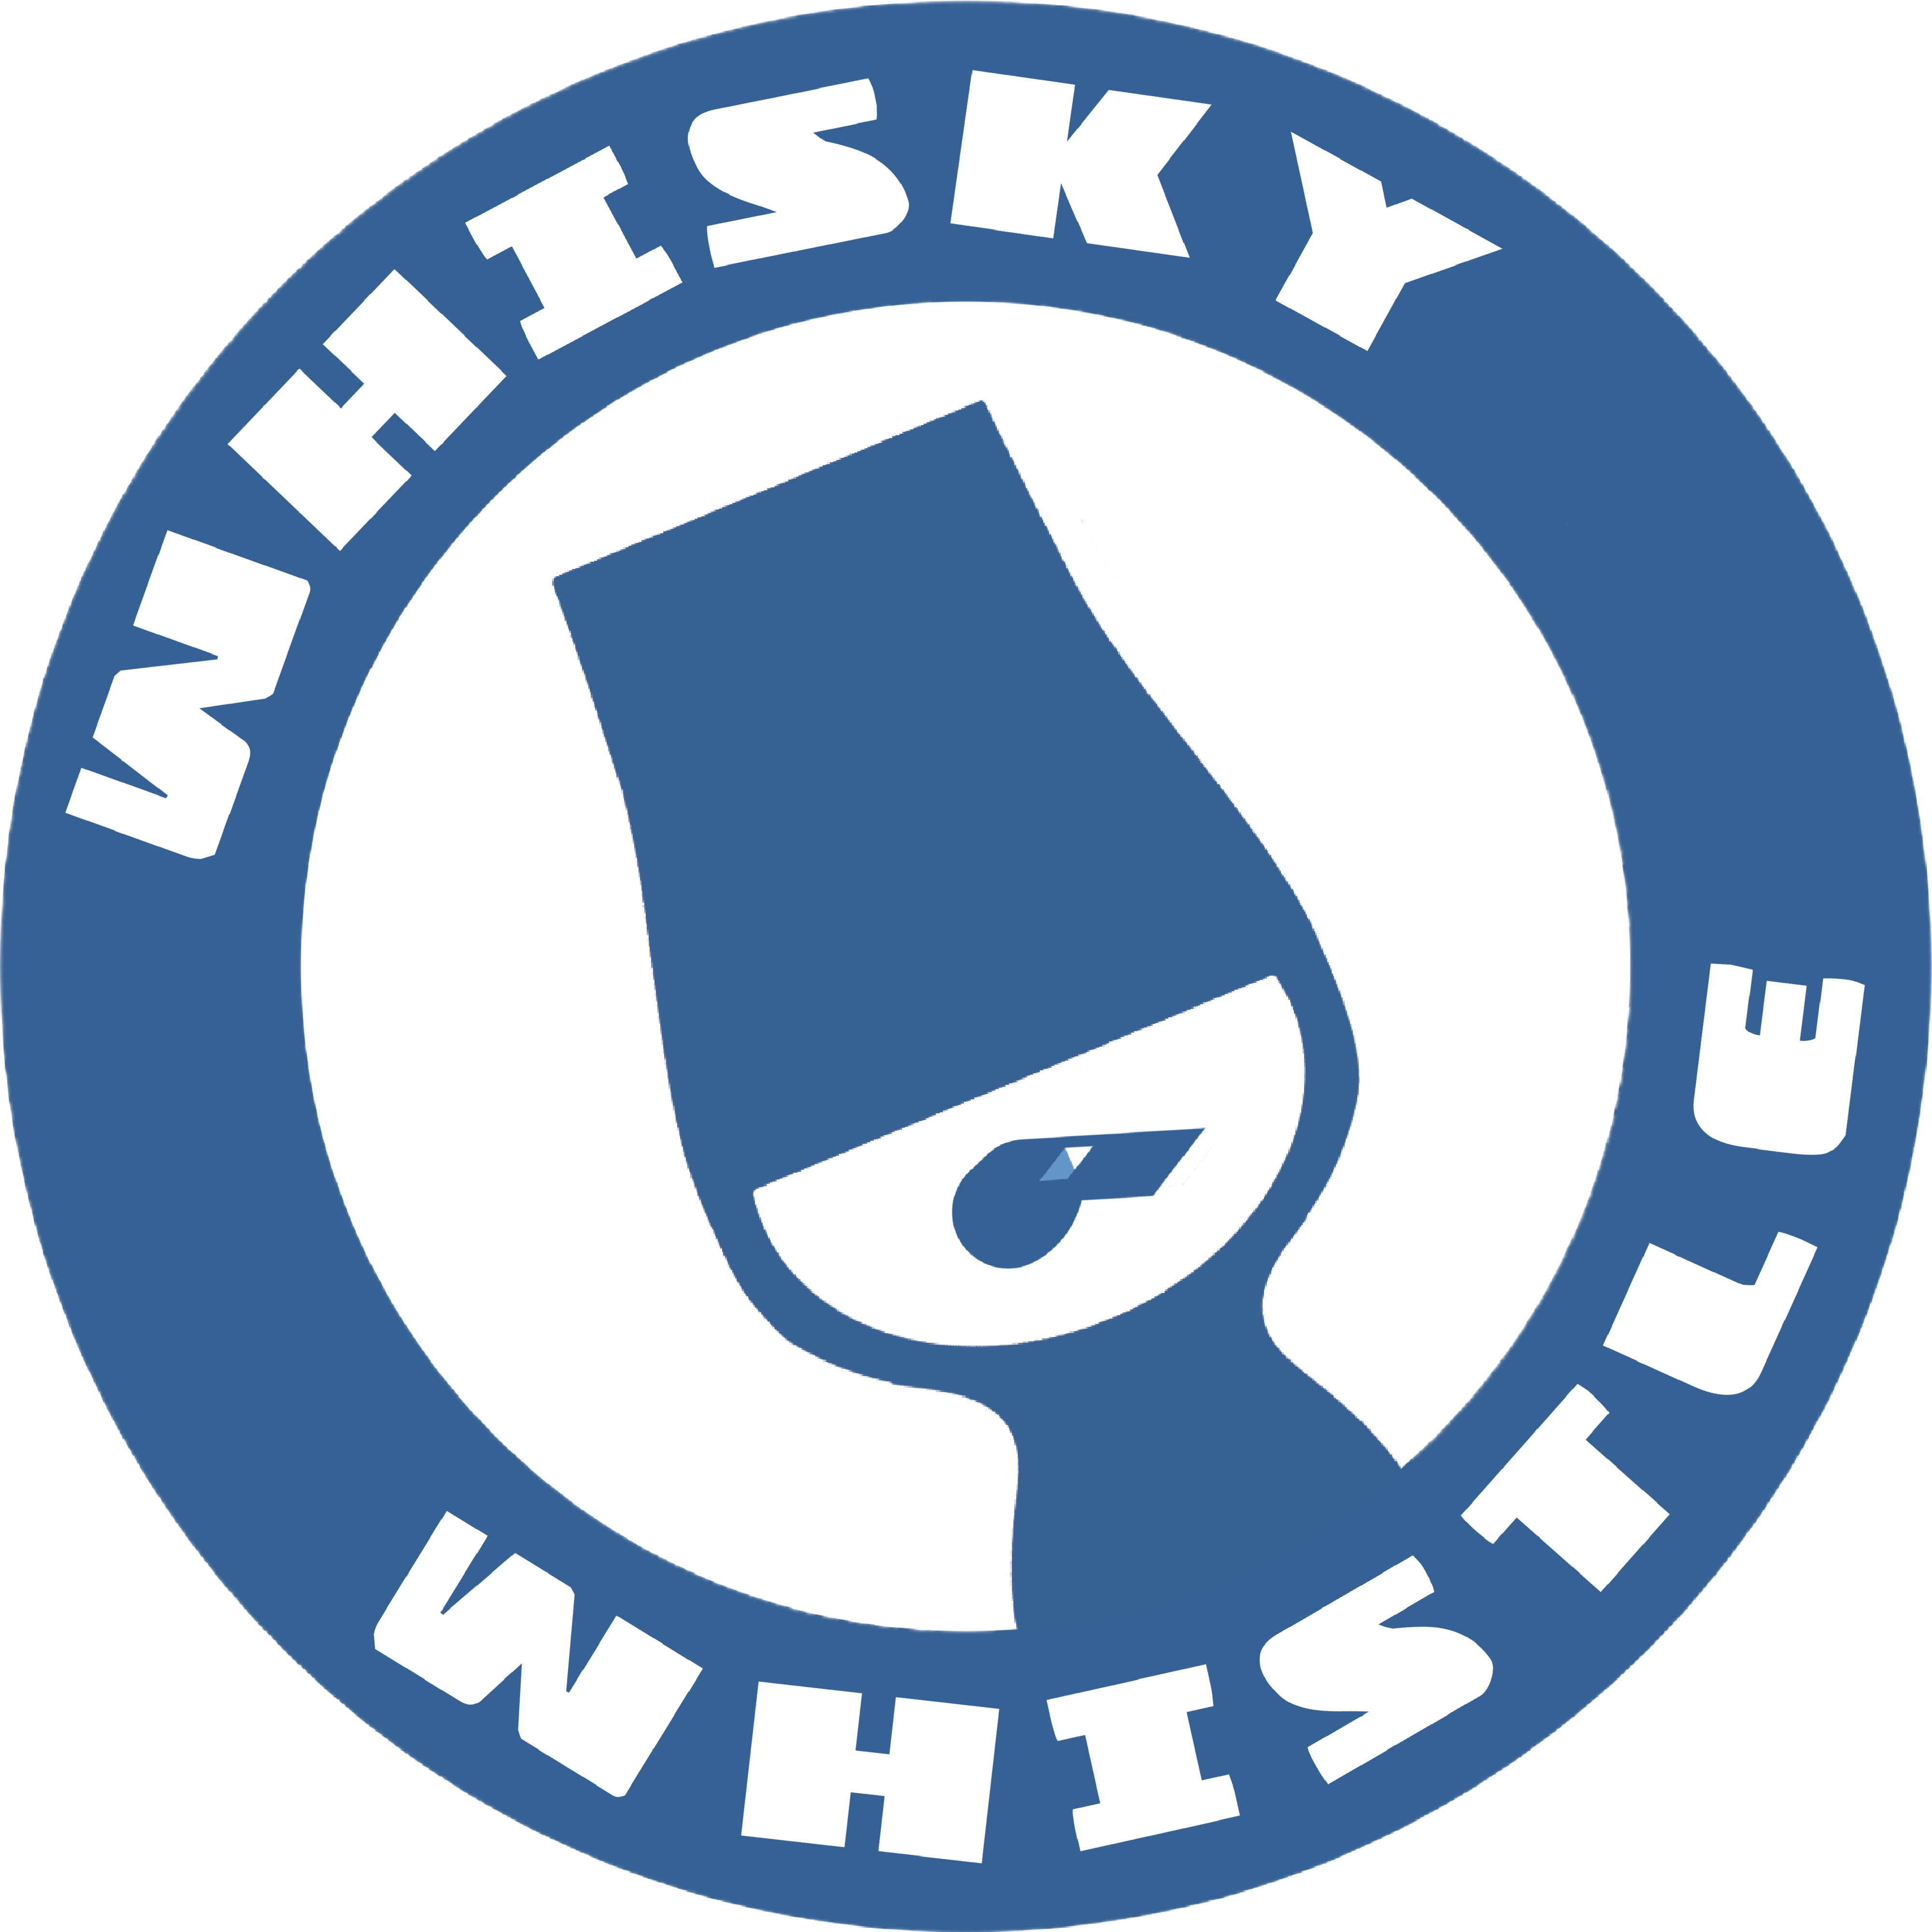 Whisky Whistle